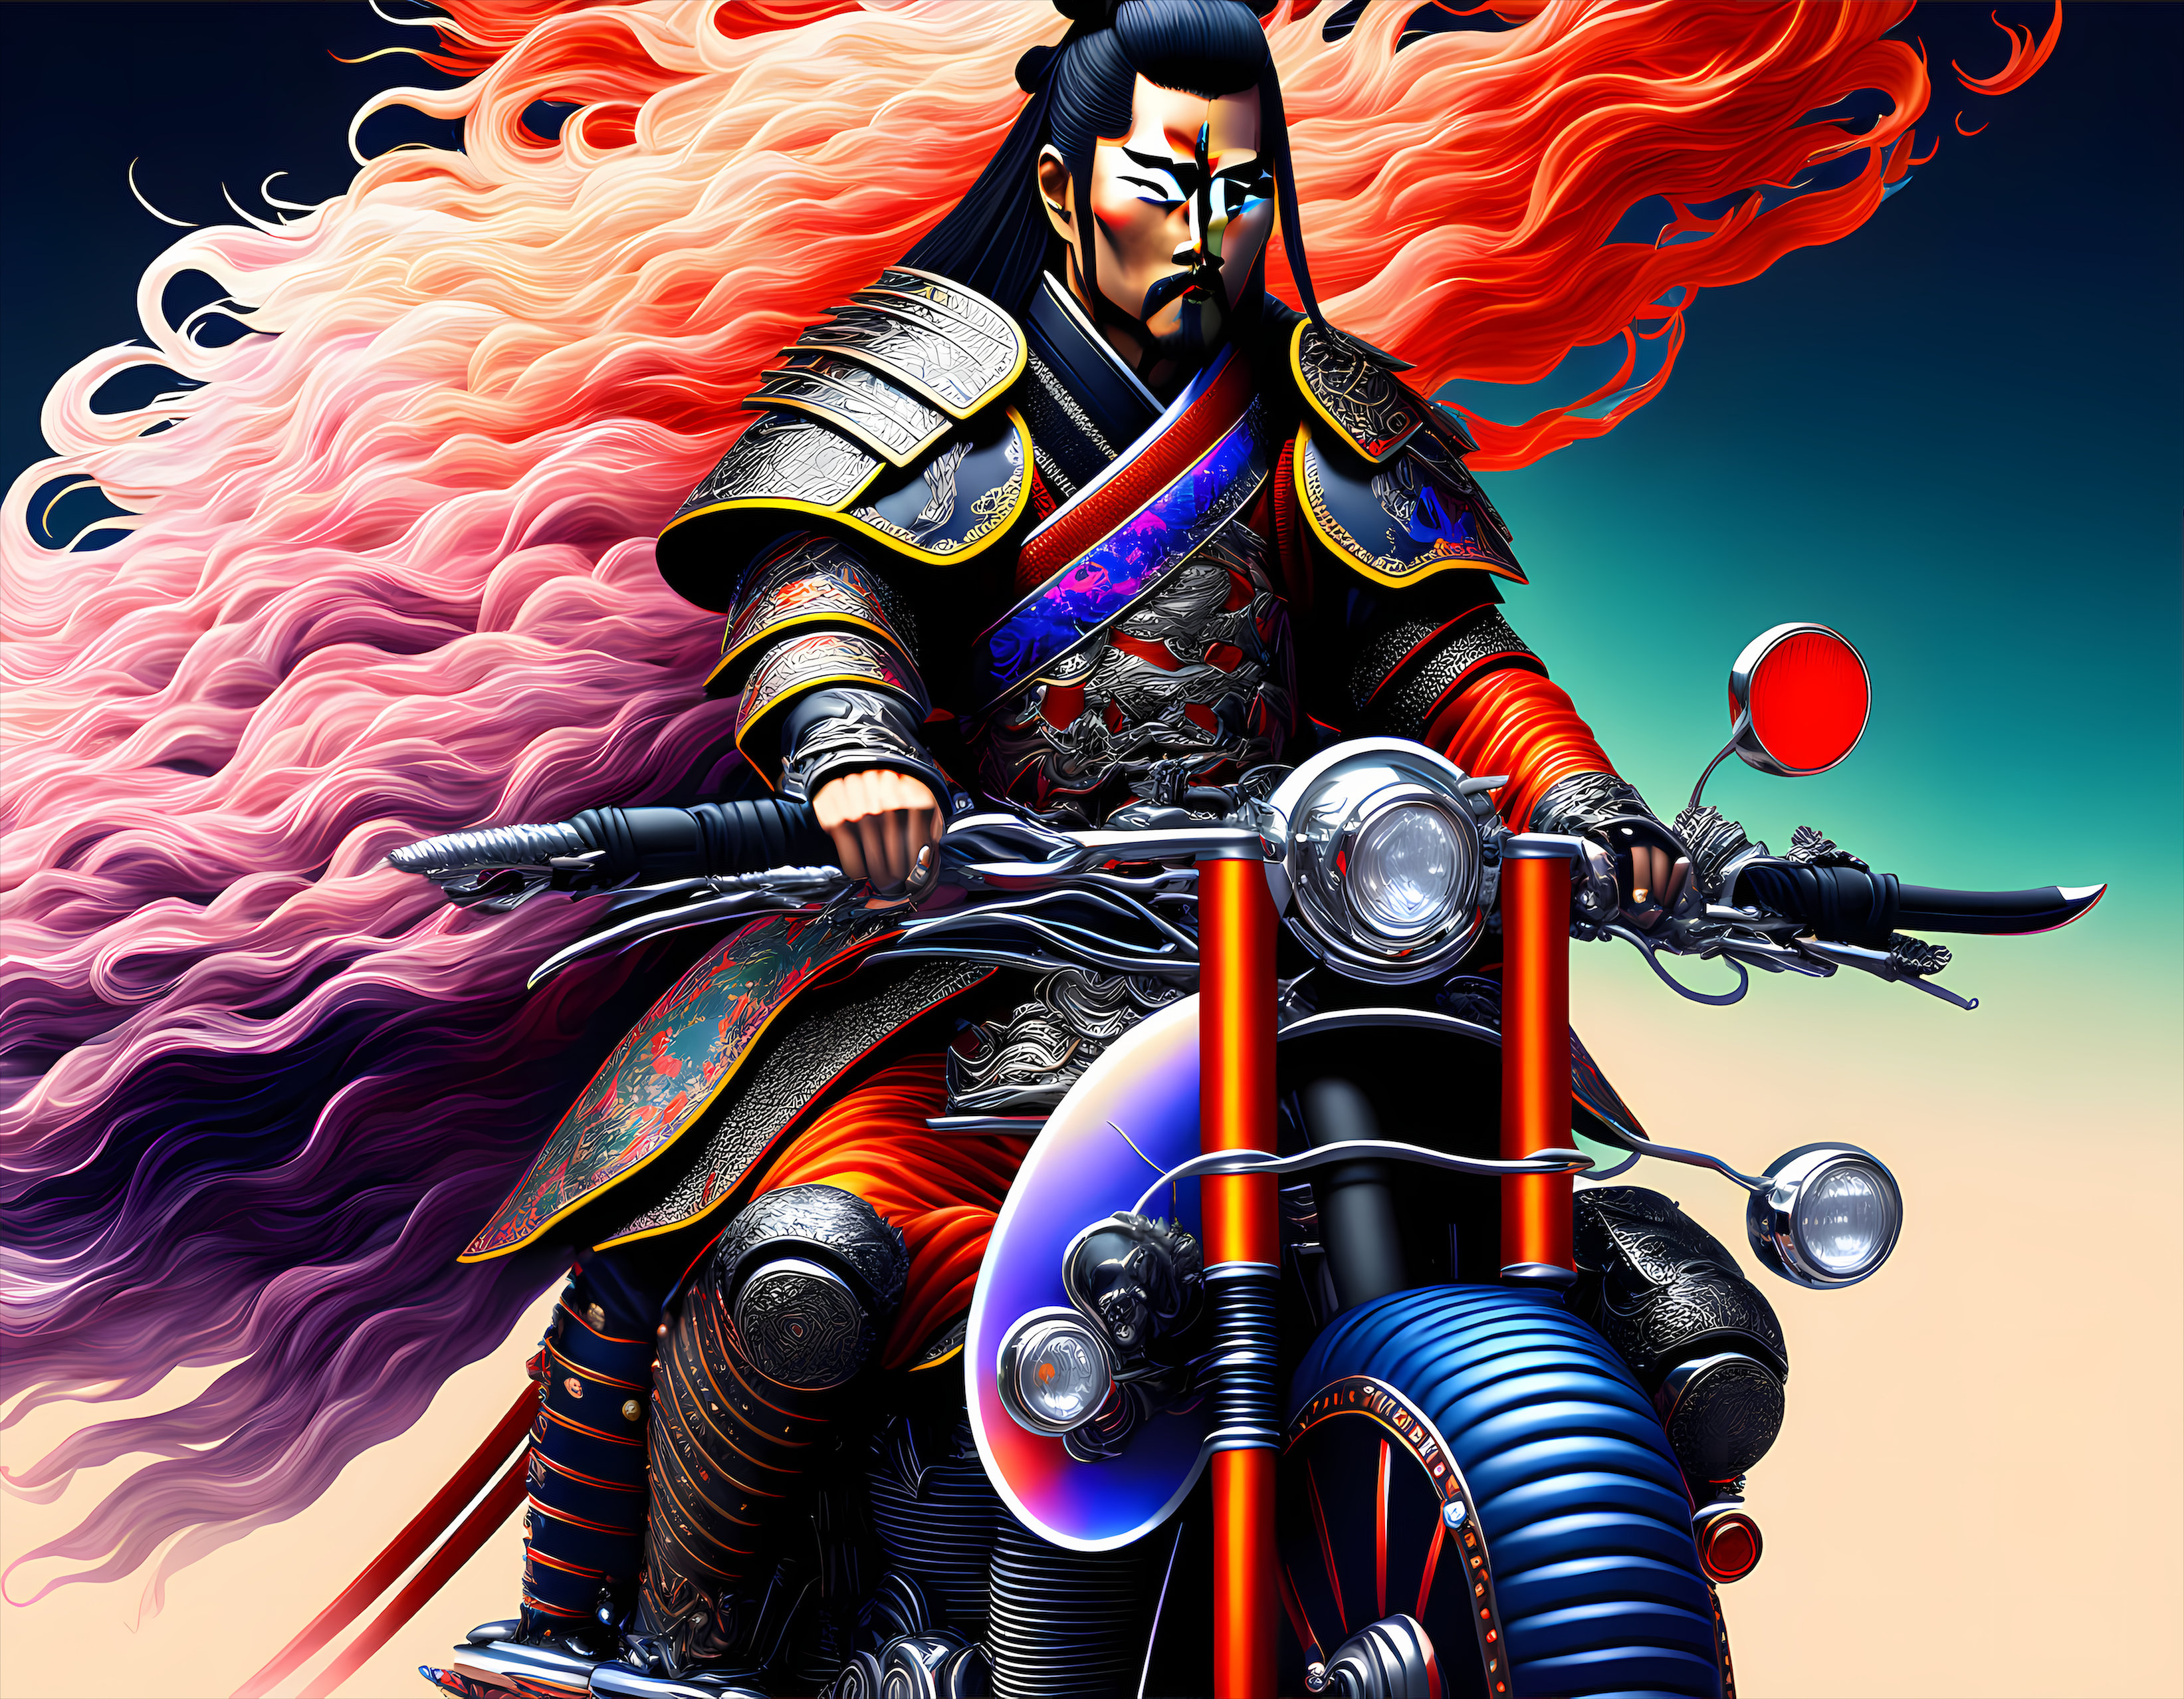 samurai riding a sazuki motorcycle.jpg